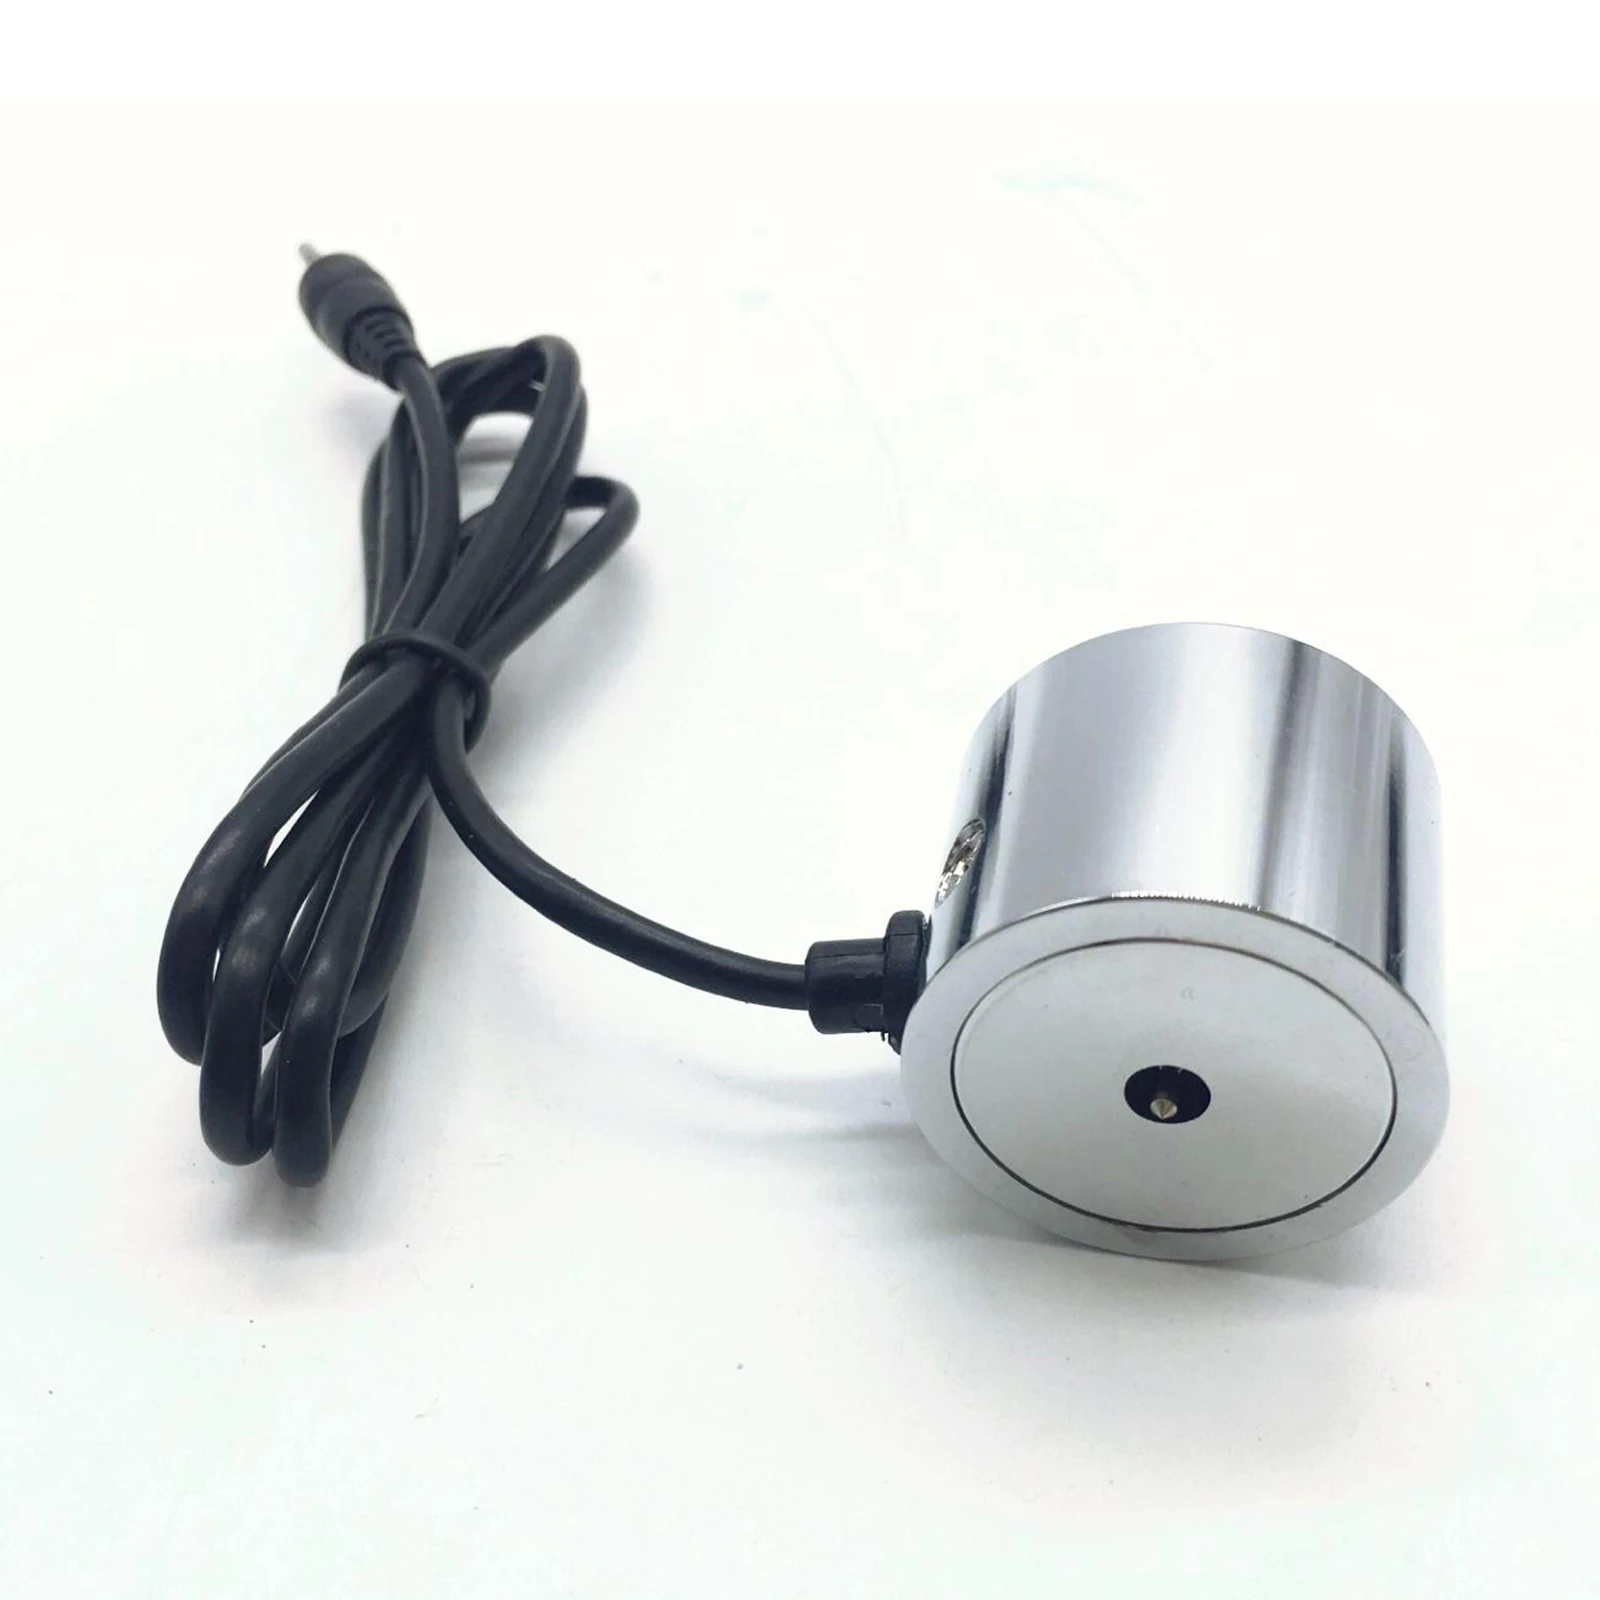 Super Sensitive Listen Thru-Wall Probe Microphone Amplifier System for Water Oil Leakage Repair-US